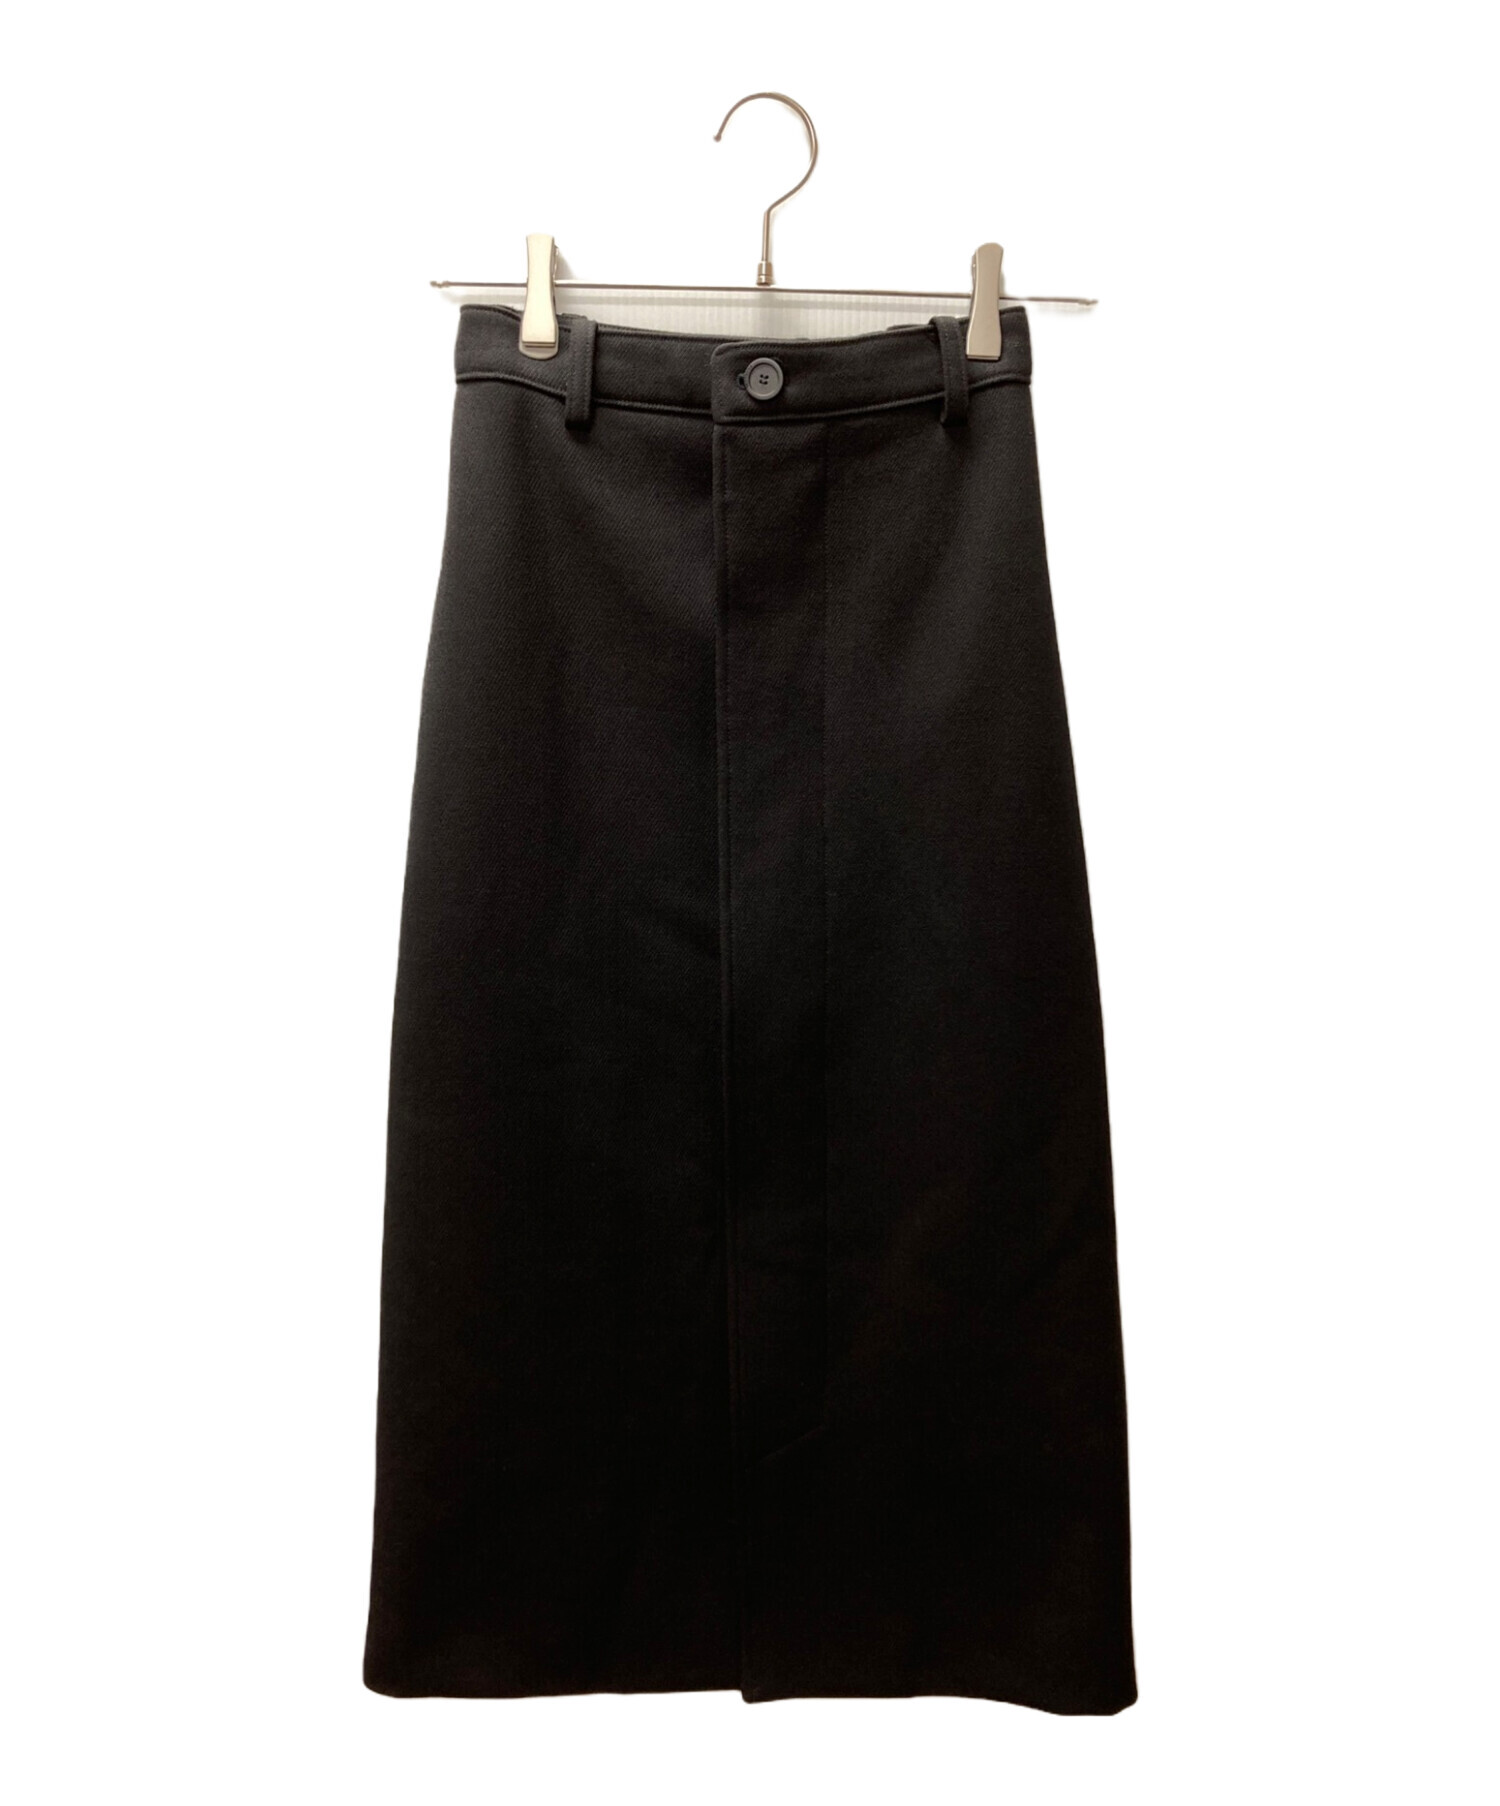 BALENCIAGA (バレンシアガ) ウール ボタン タイト スカート ブラック サイズ:34